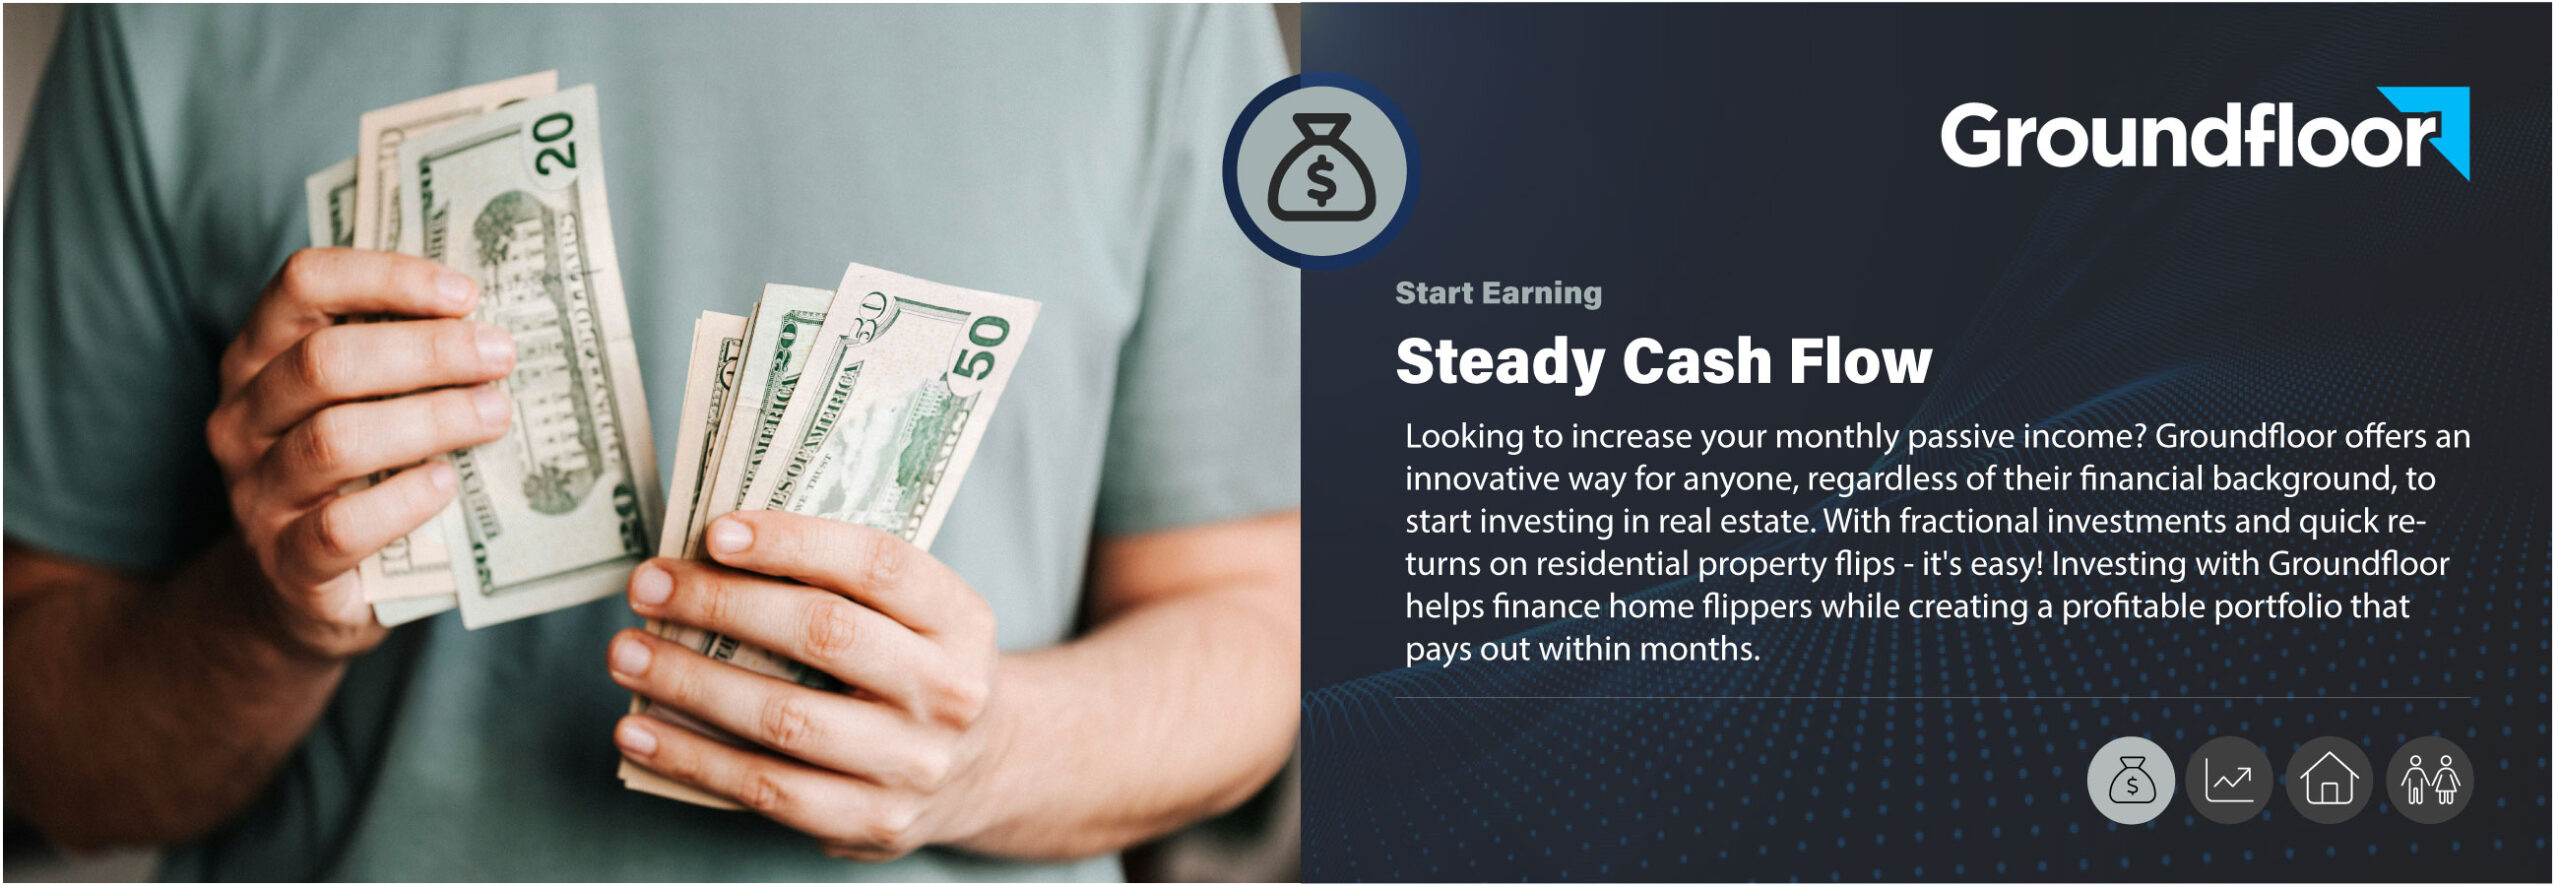 steady-cash-flow-banner-scaled.jpg